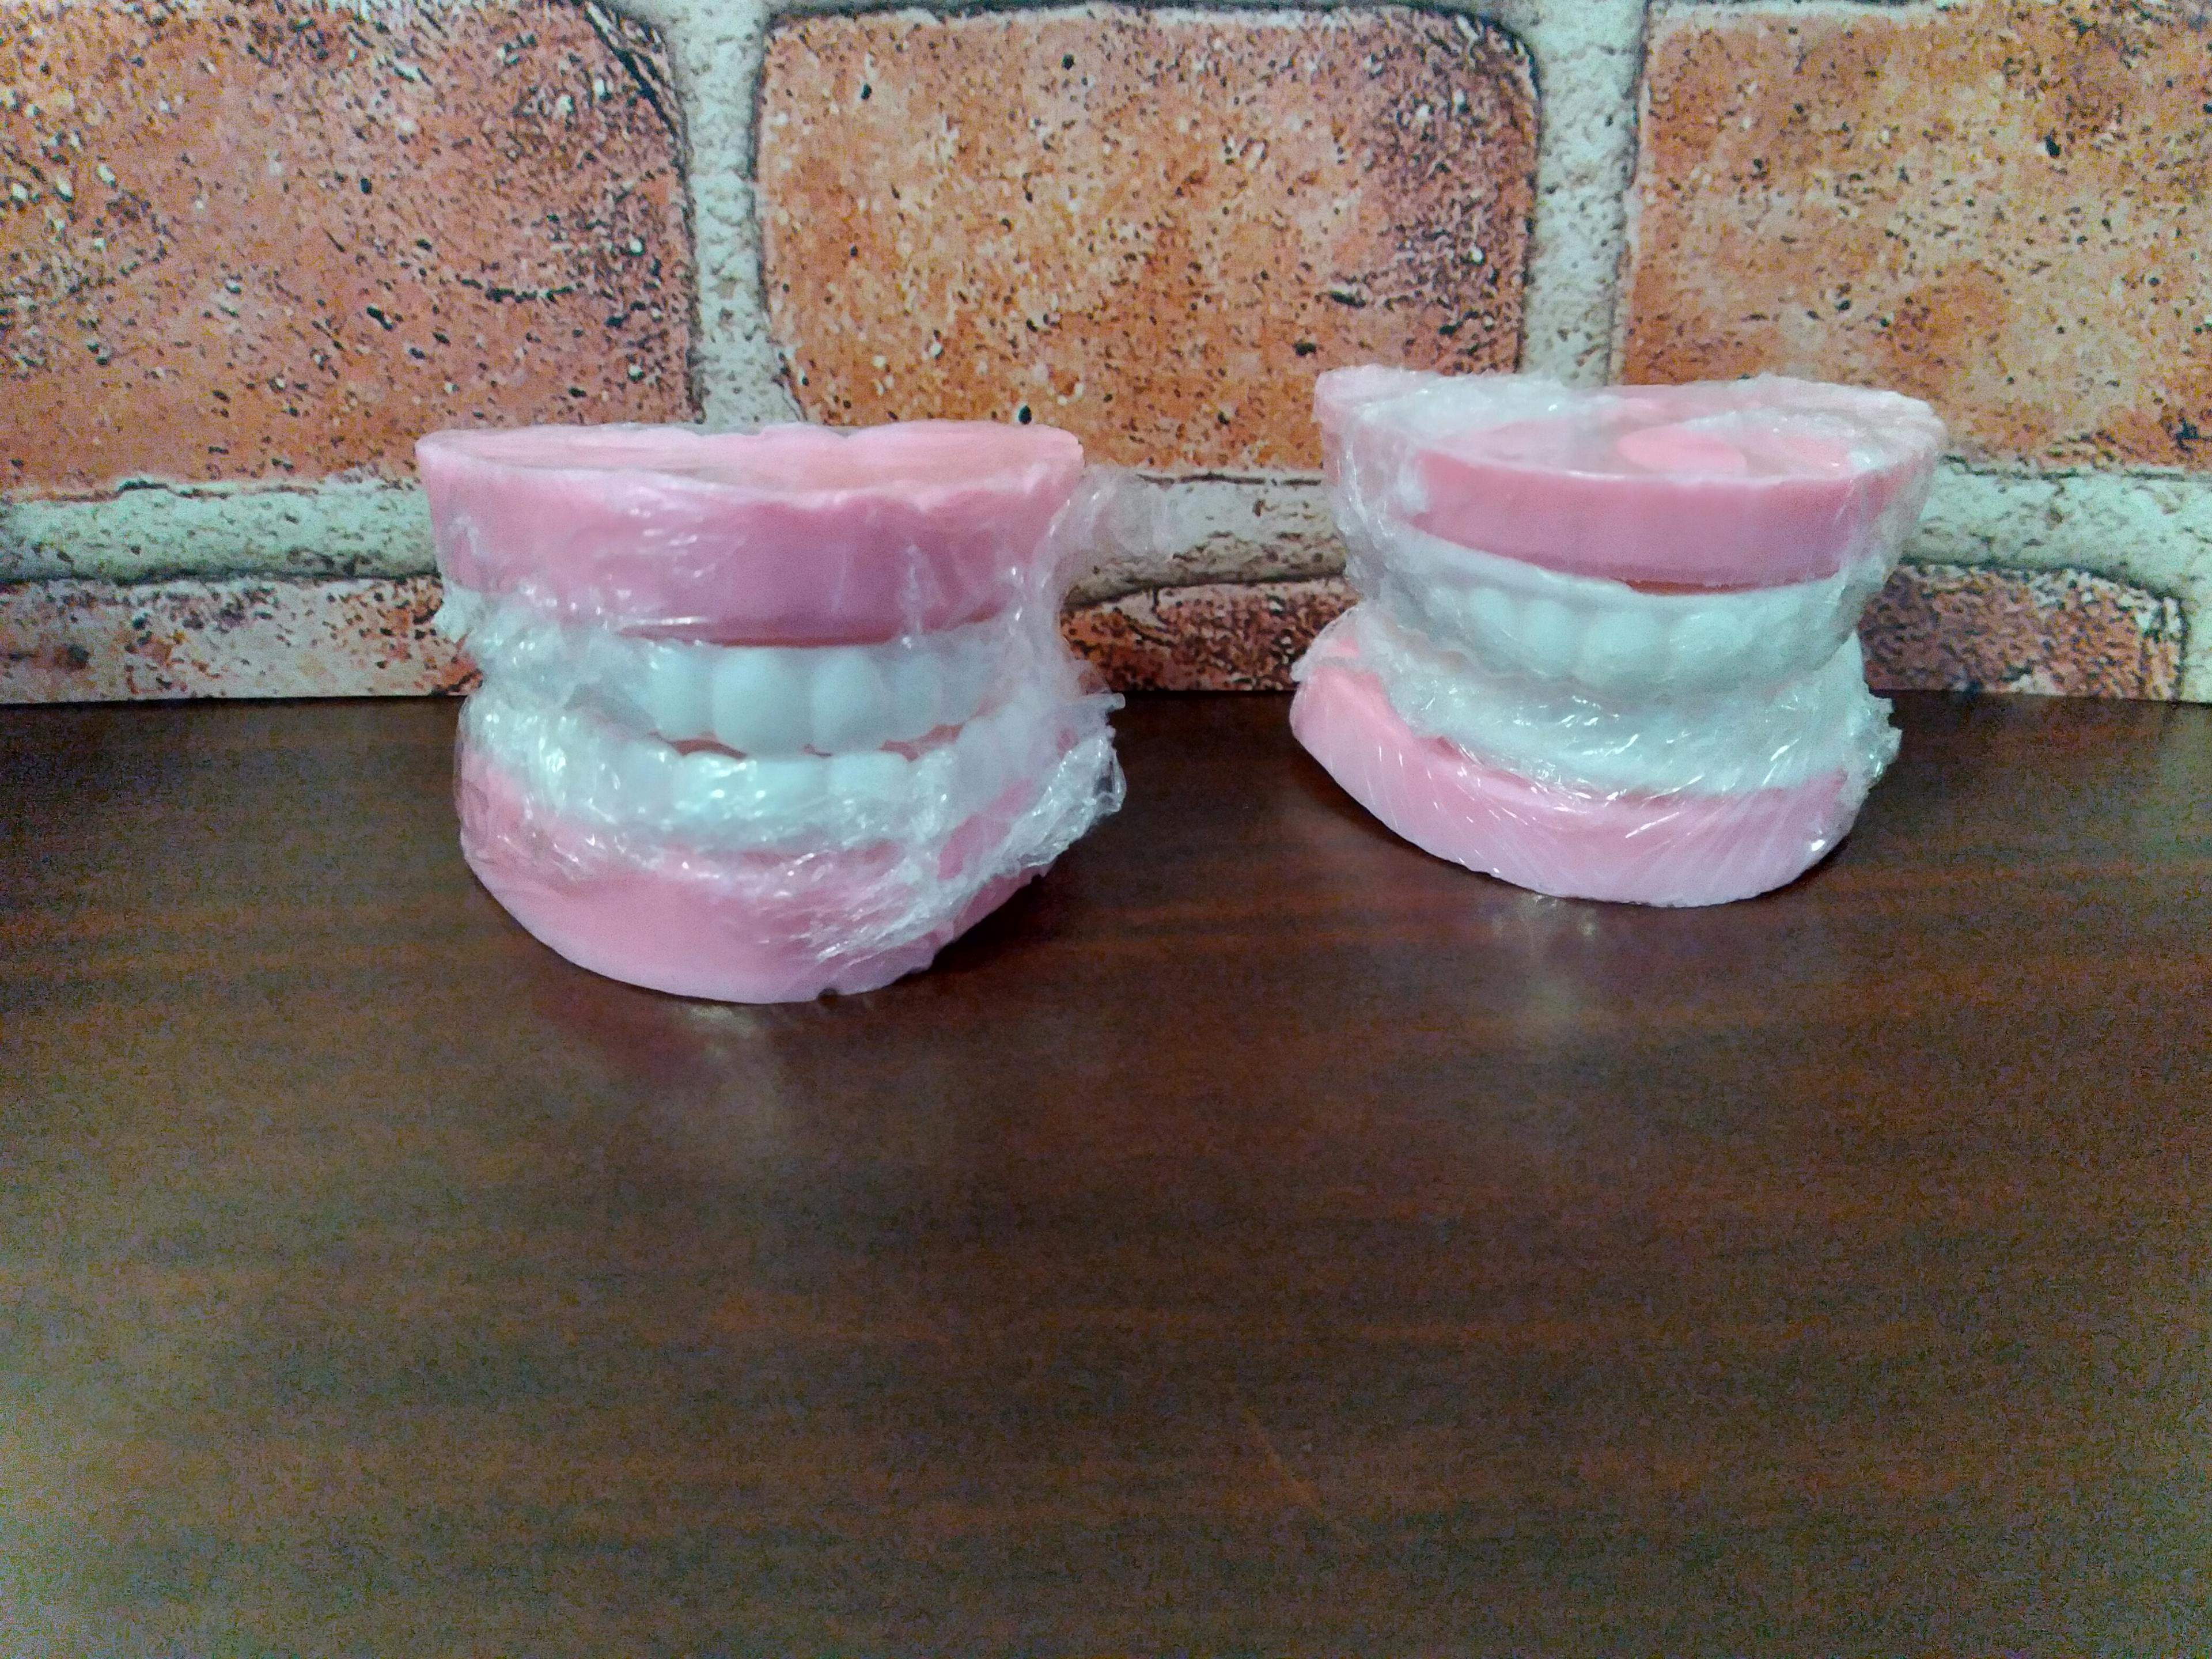 Teeth soap